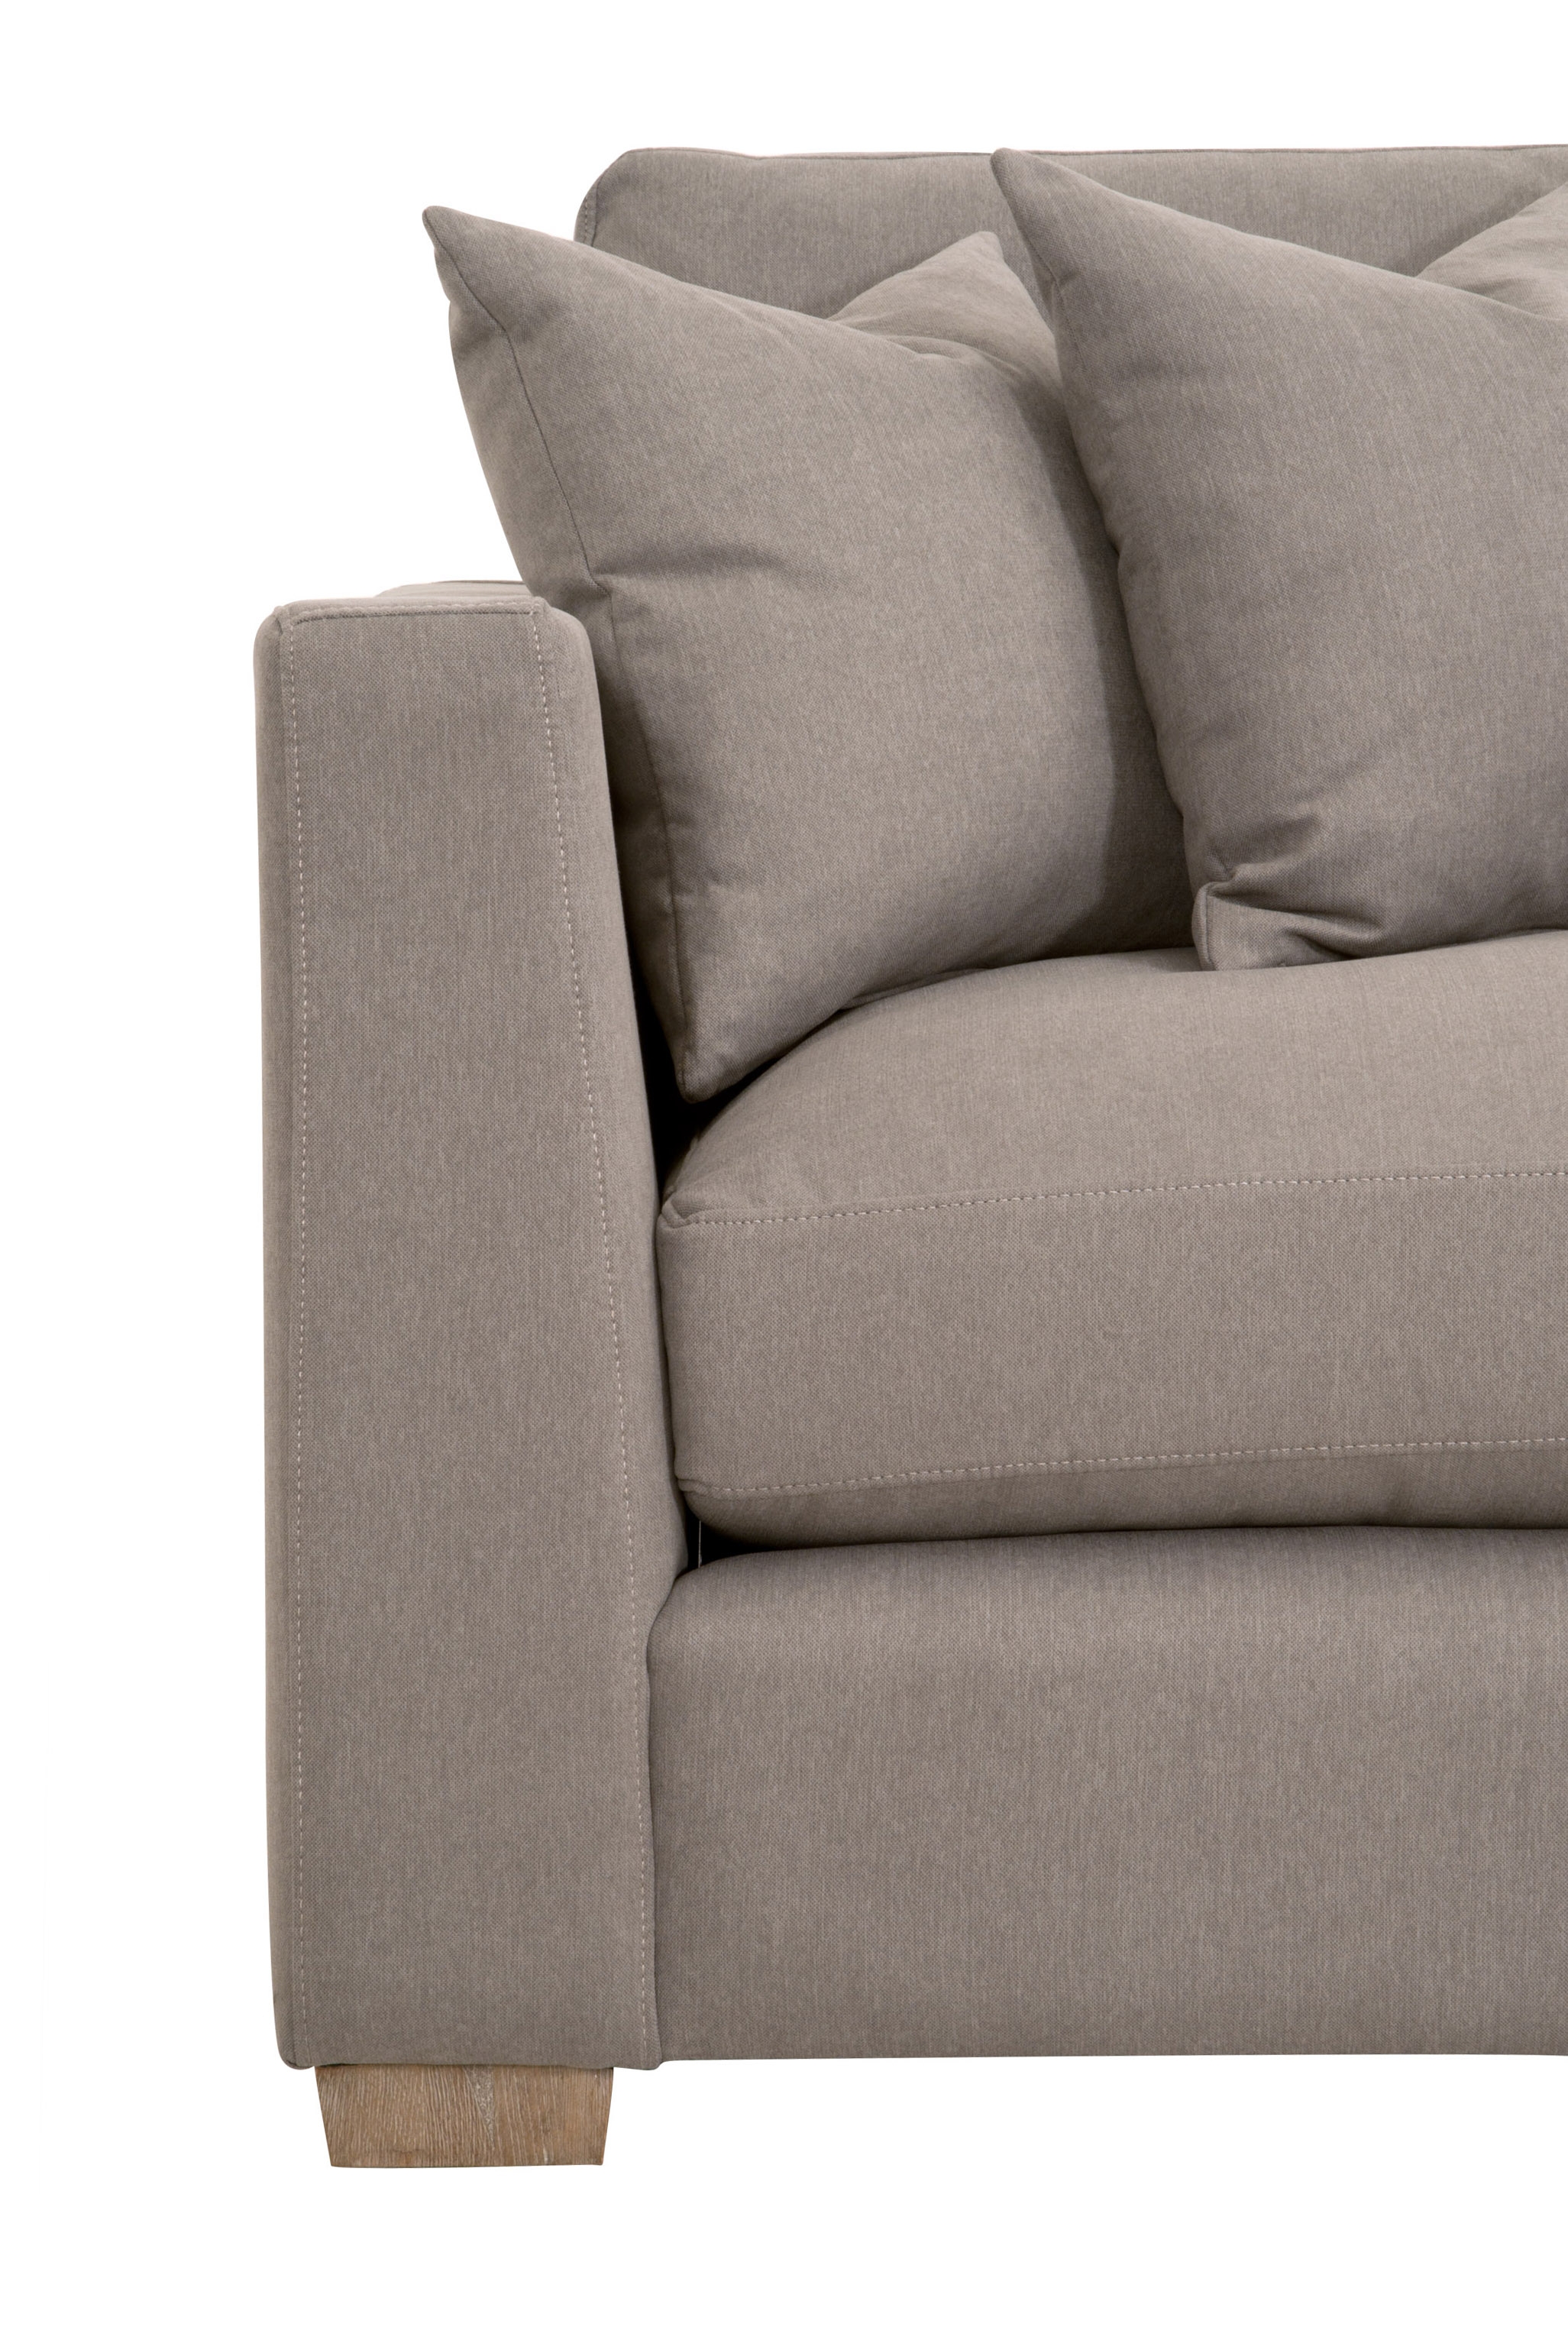 Hayden Modular Taper 2-Seat Left Arm Sofa, LiveSmart Peyton-Slate, Natural Gray Oak - Image 9